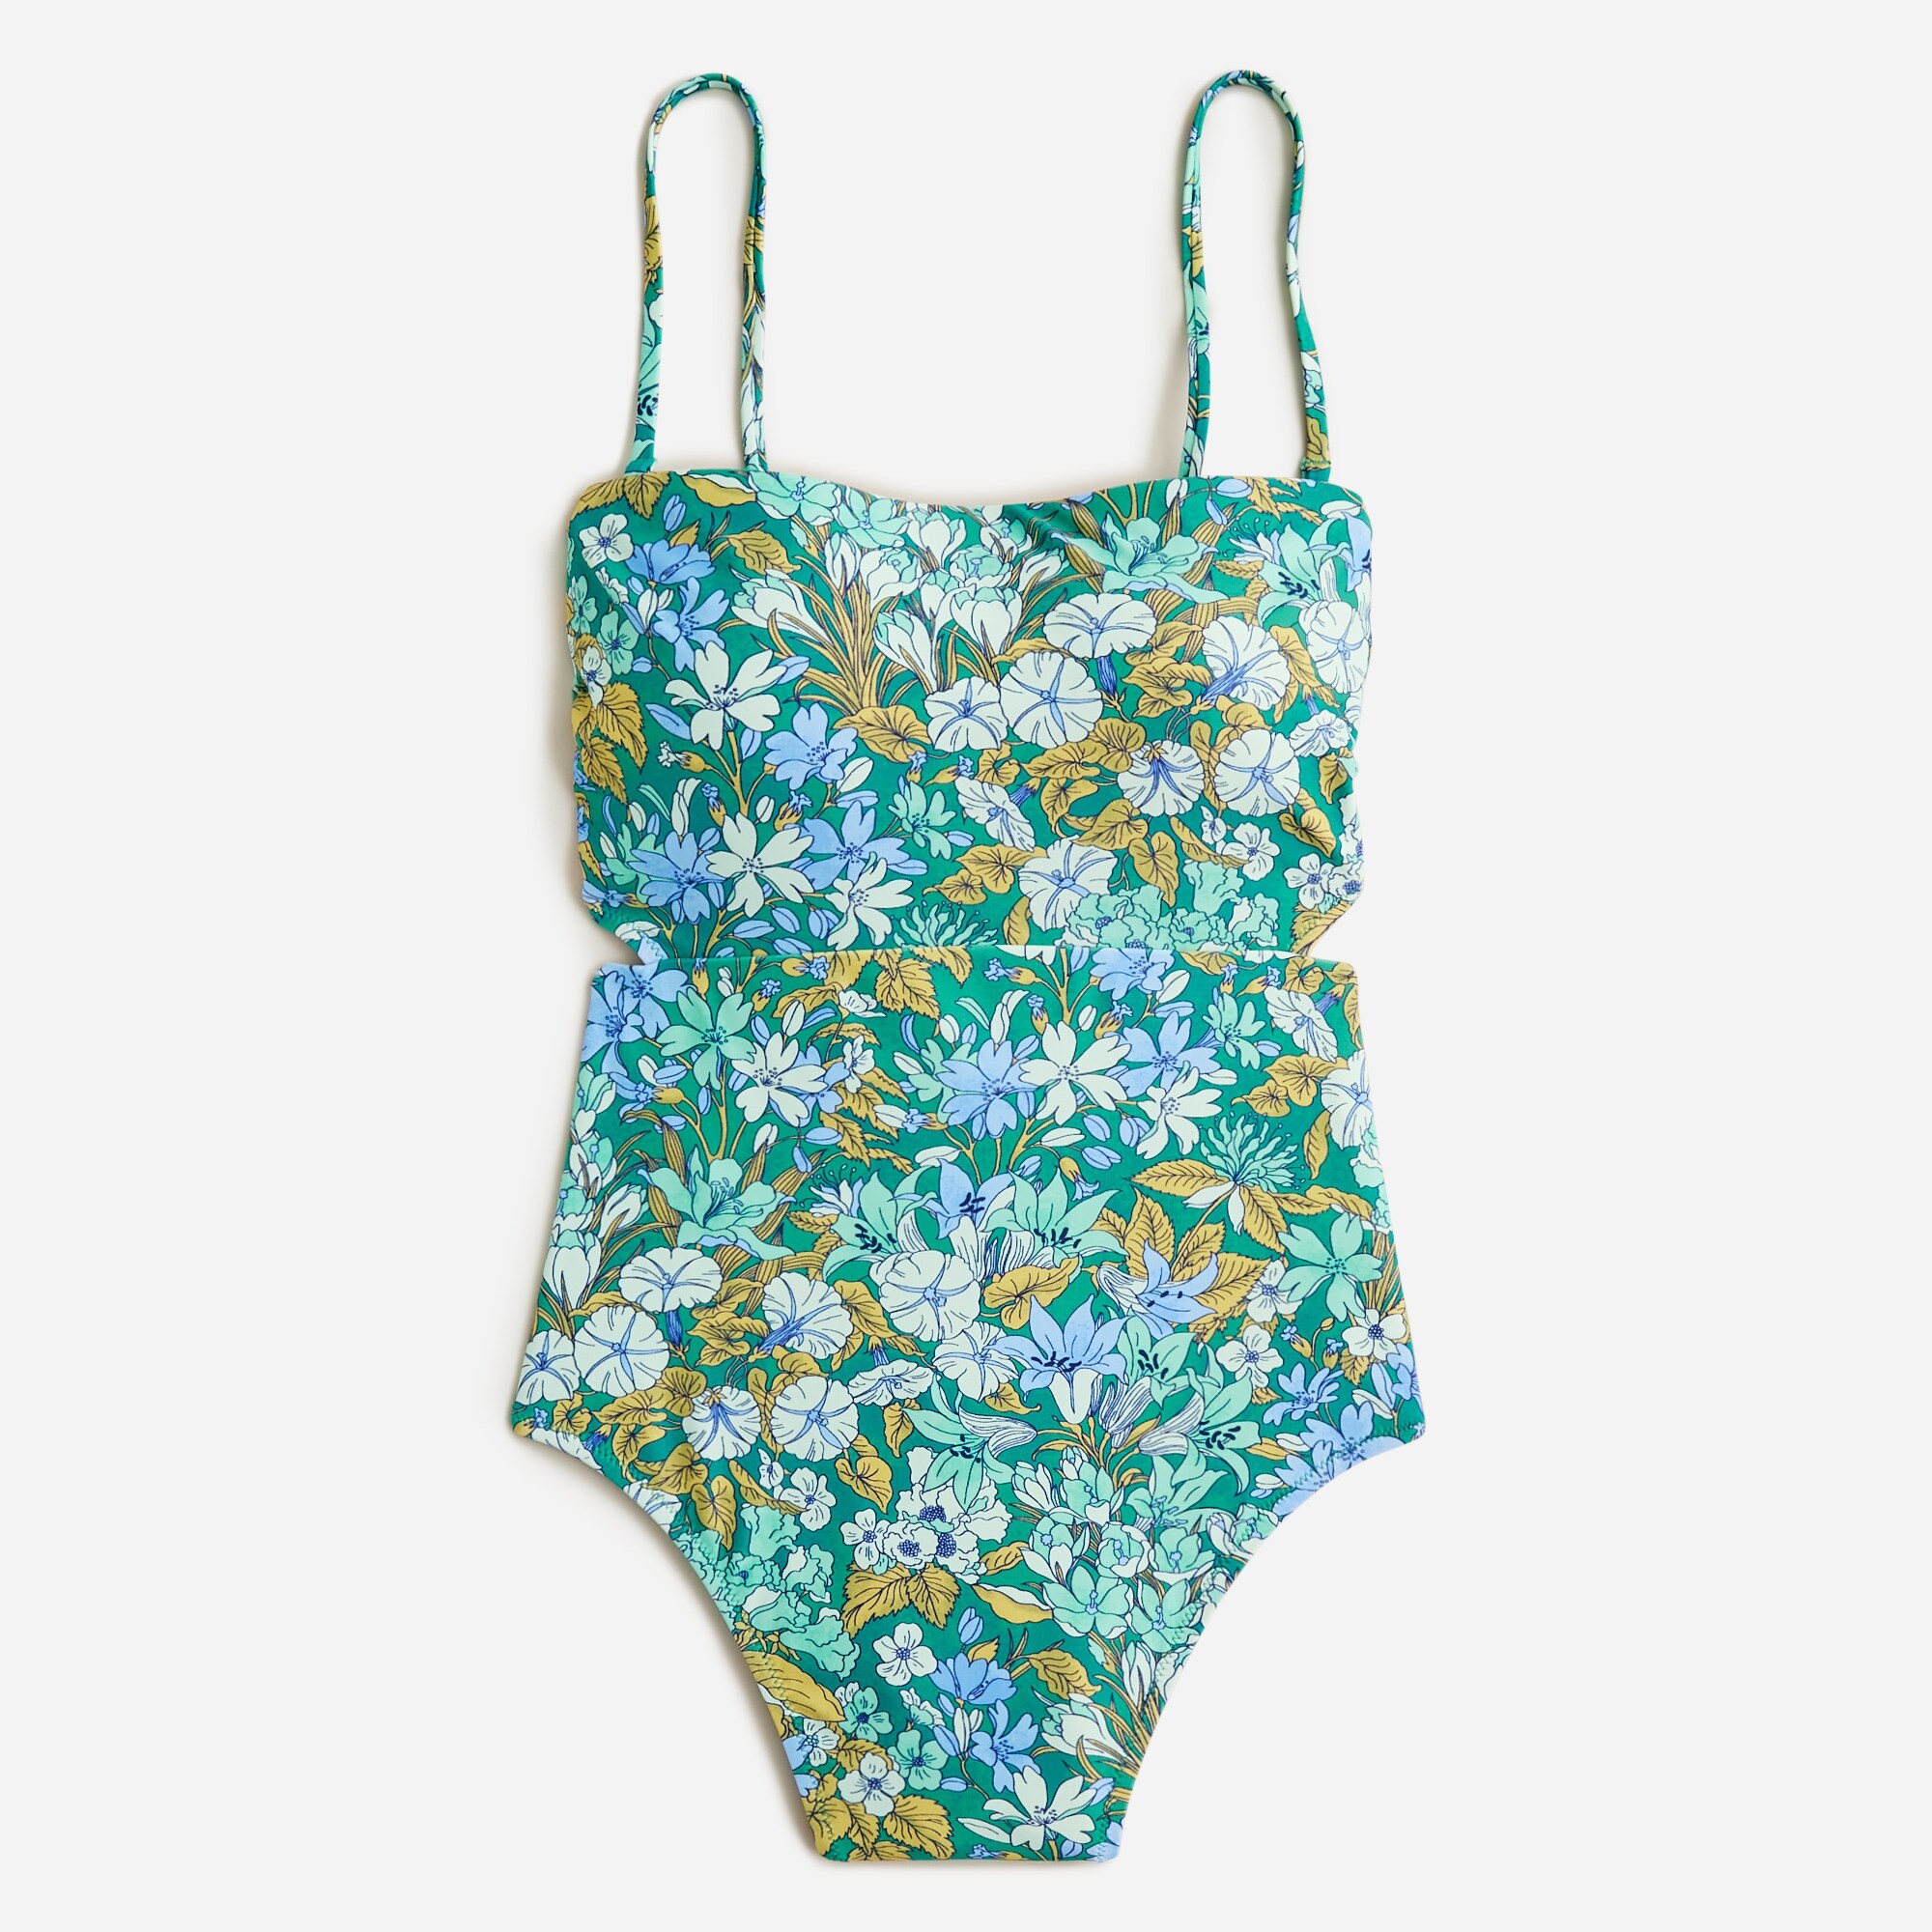  Cutout one-piece swimsuit in aqua blooms